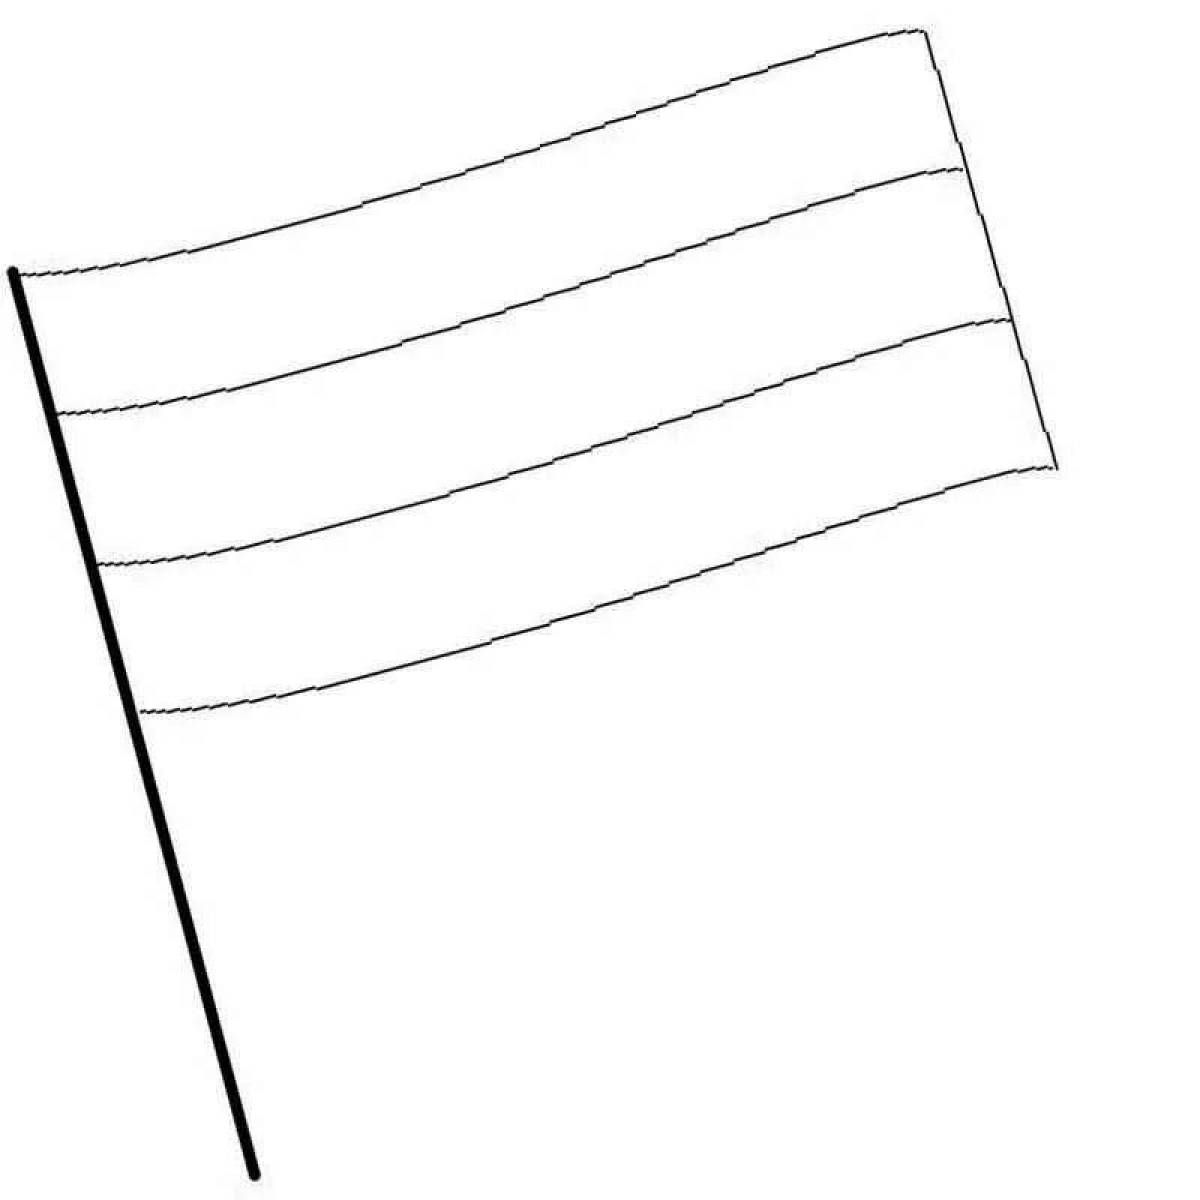 Контурный рисунок флага